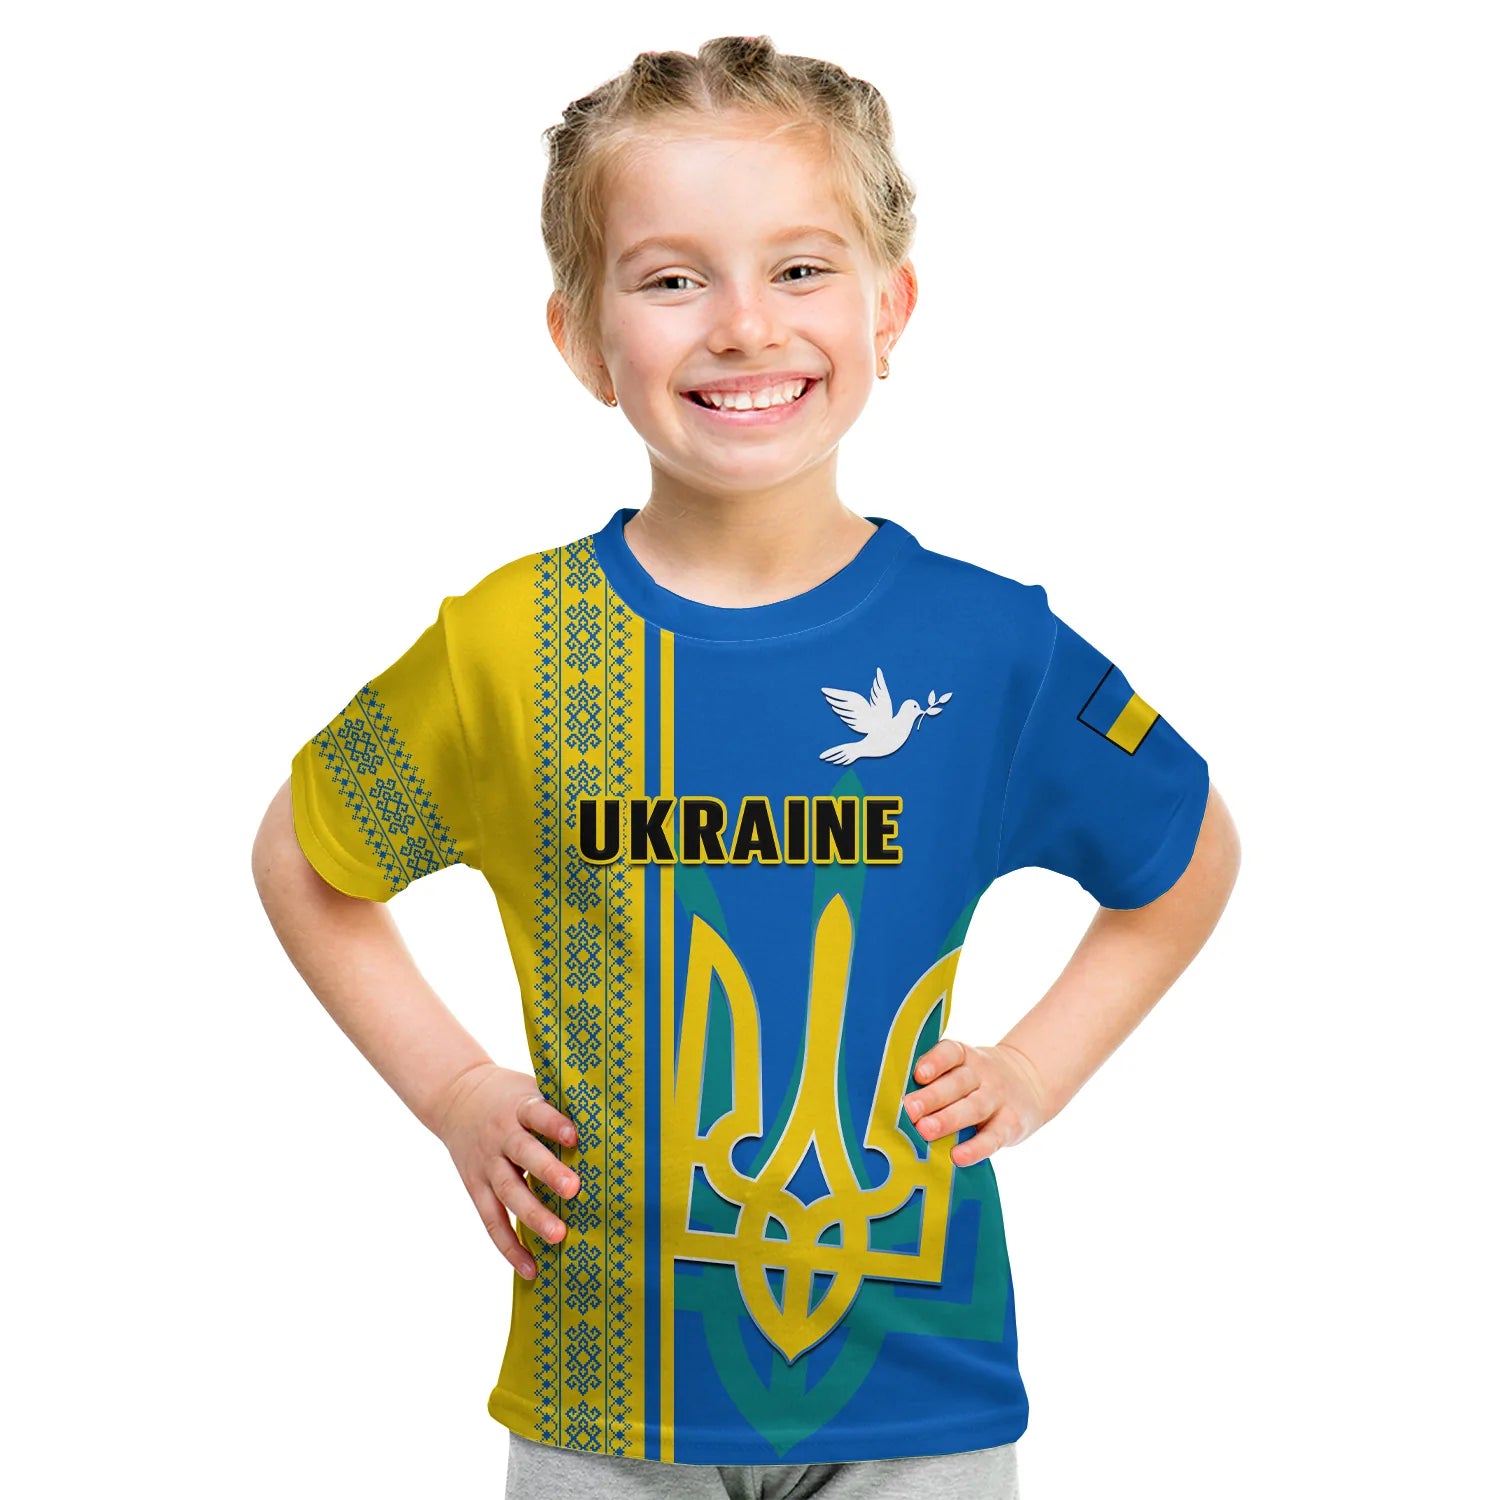 ukraine-unity-day-t-shirt-kid-vyshyvanka-ukrainian-coat-of-arms